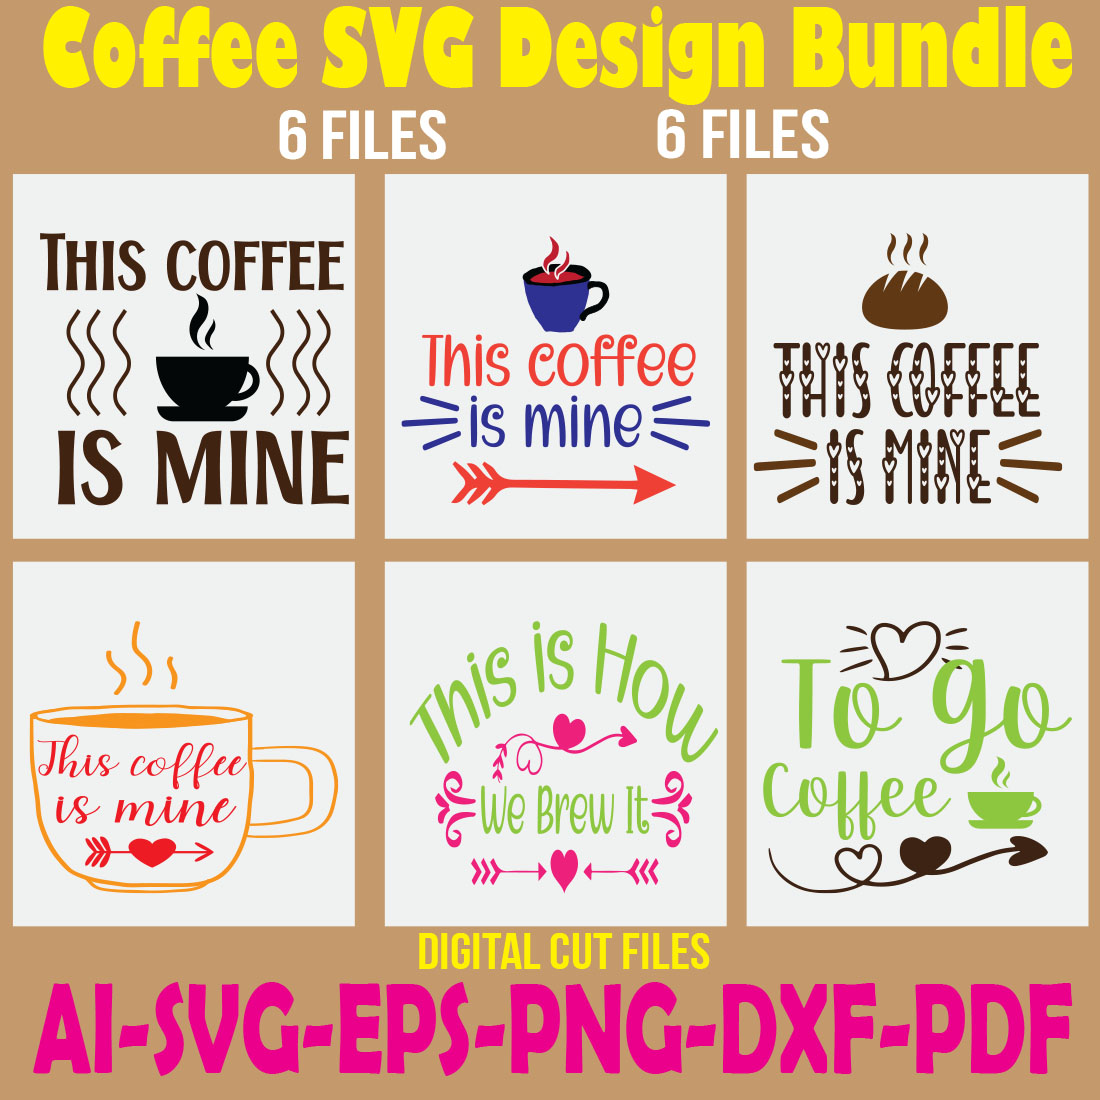 Coffee SVG Design Bundle cover image.